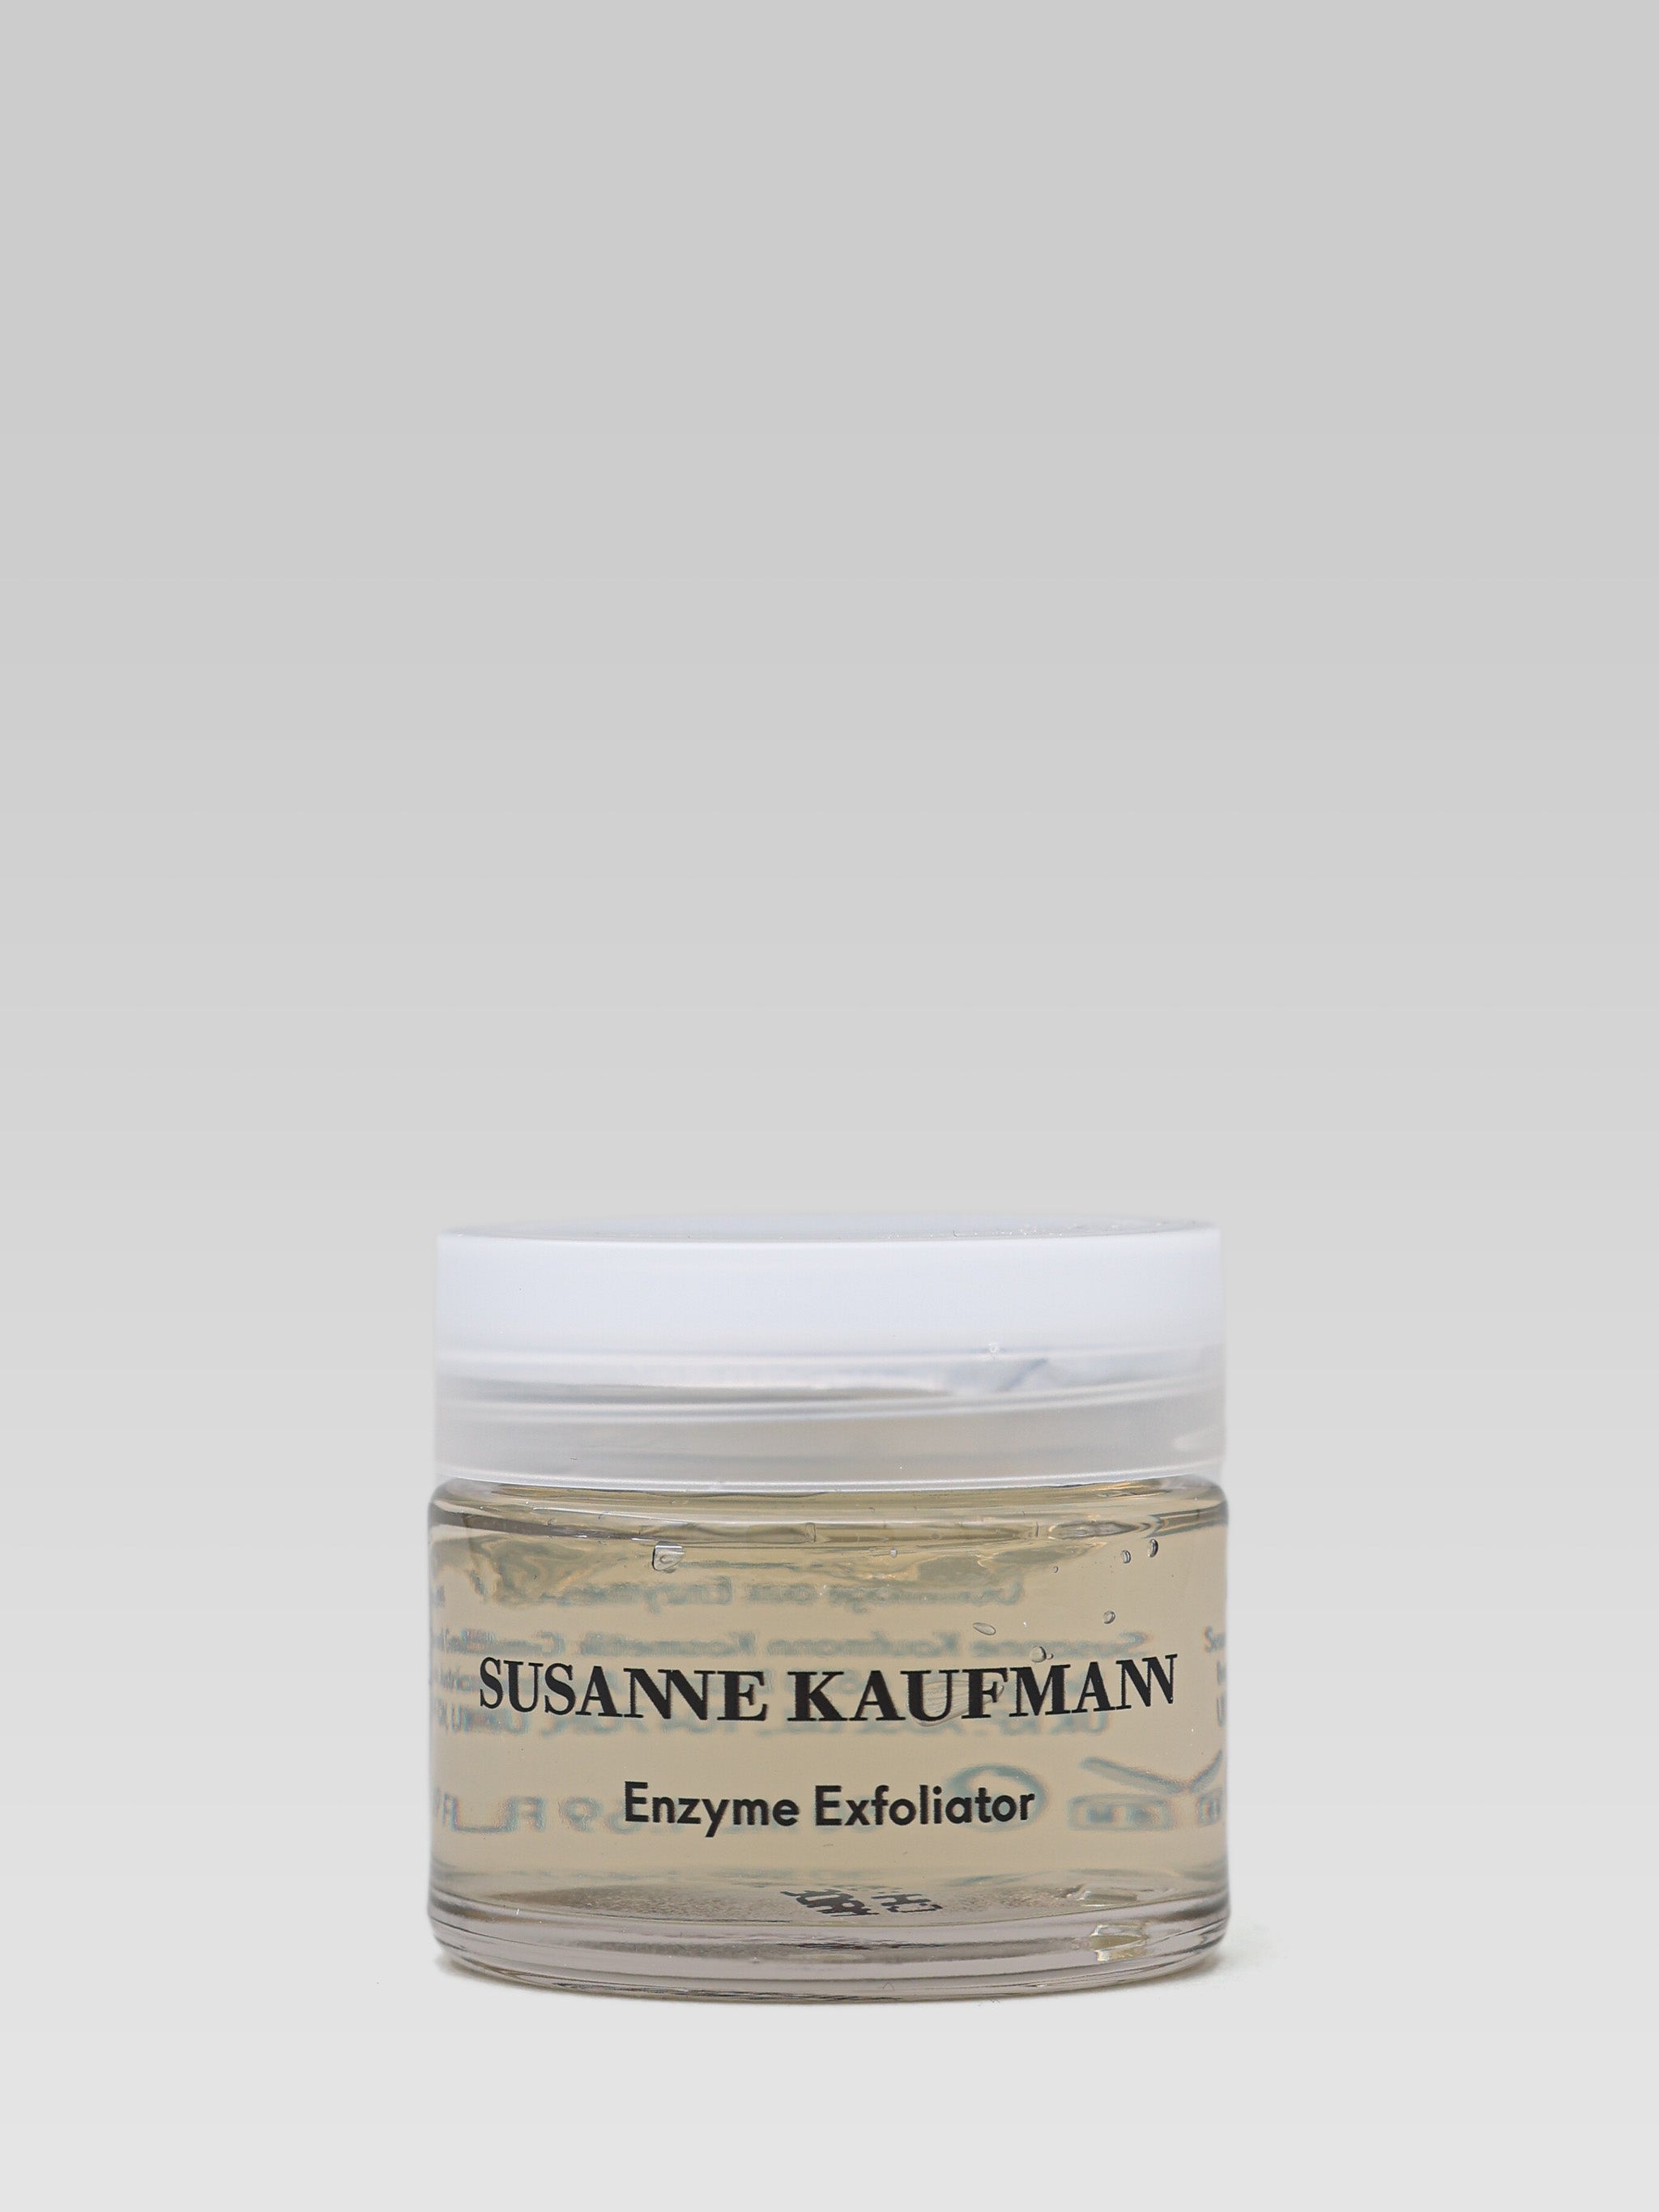 SUSANNE KAUFMANN Enzyme Exfoliator product shot 